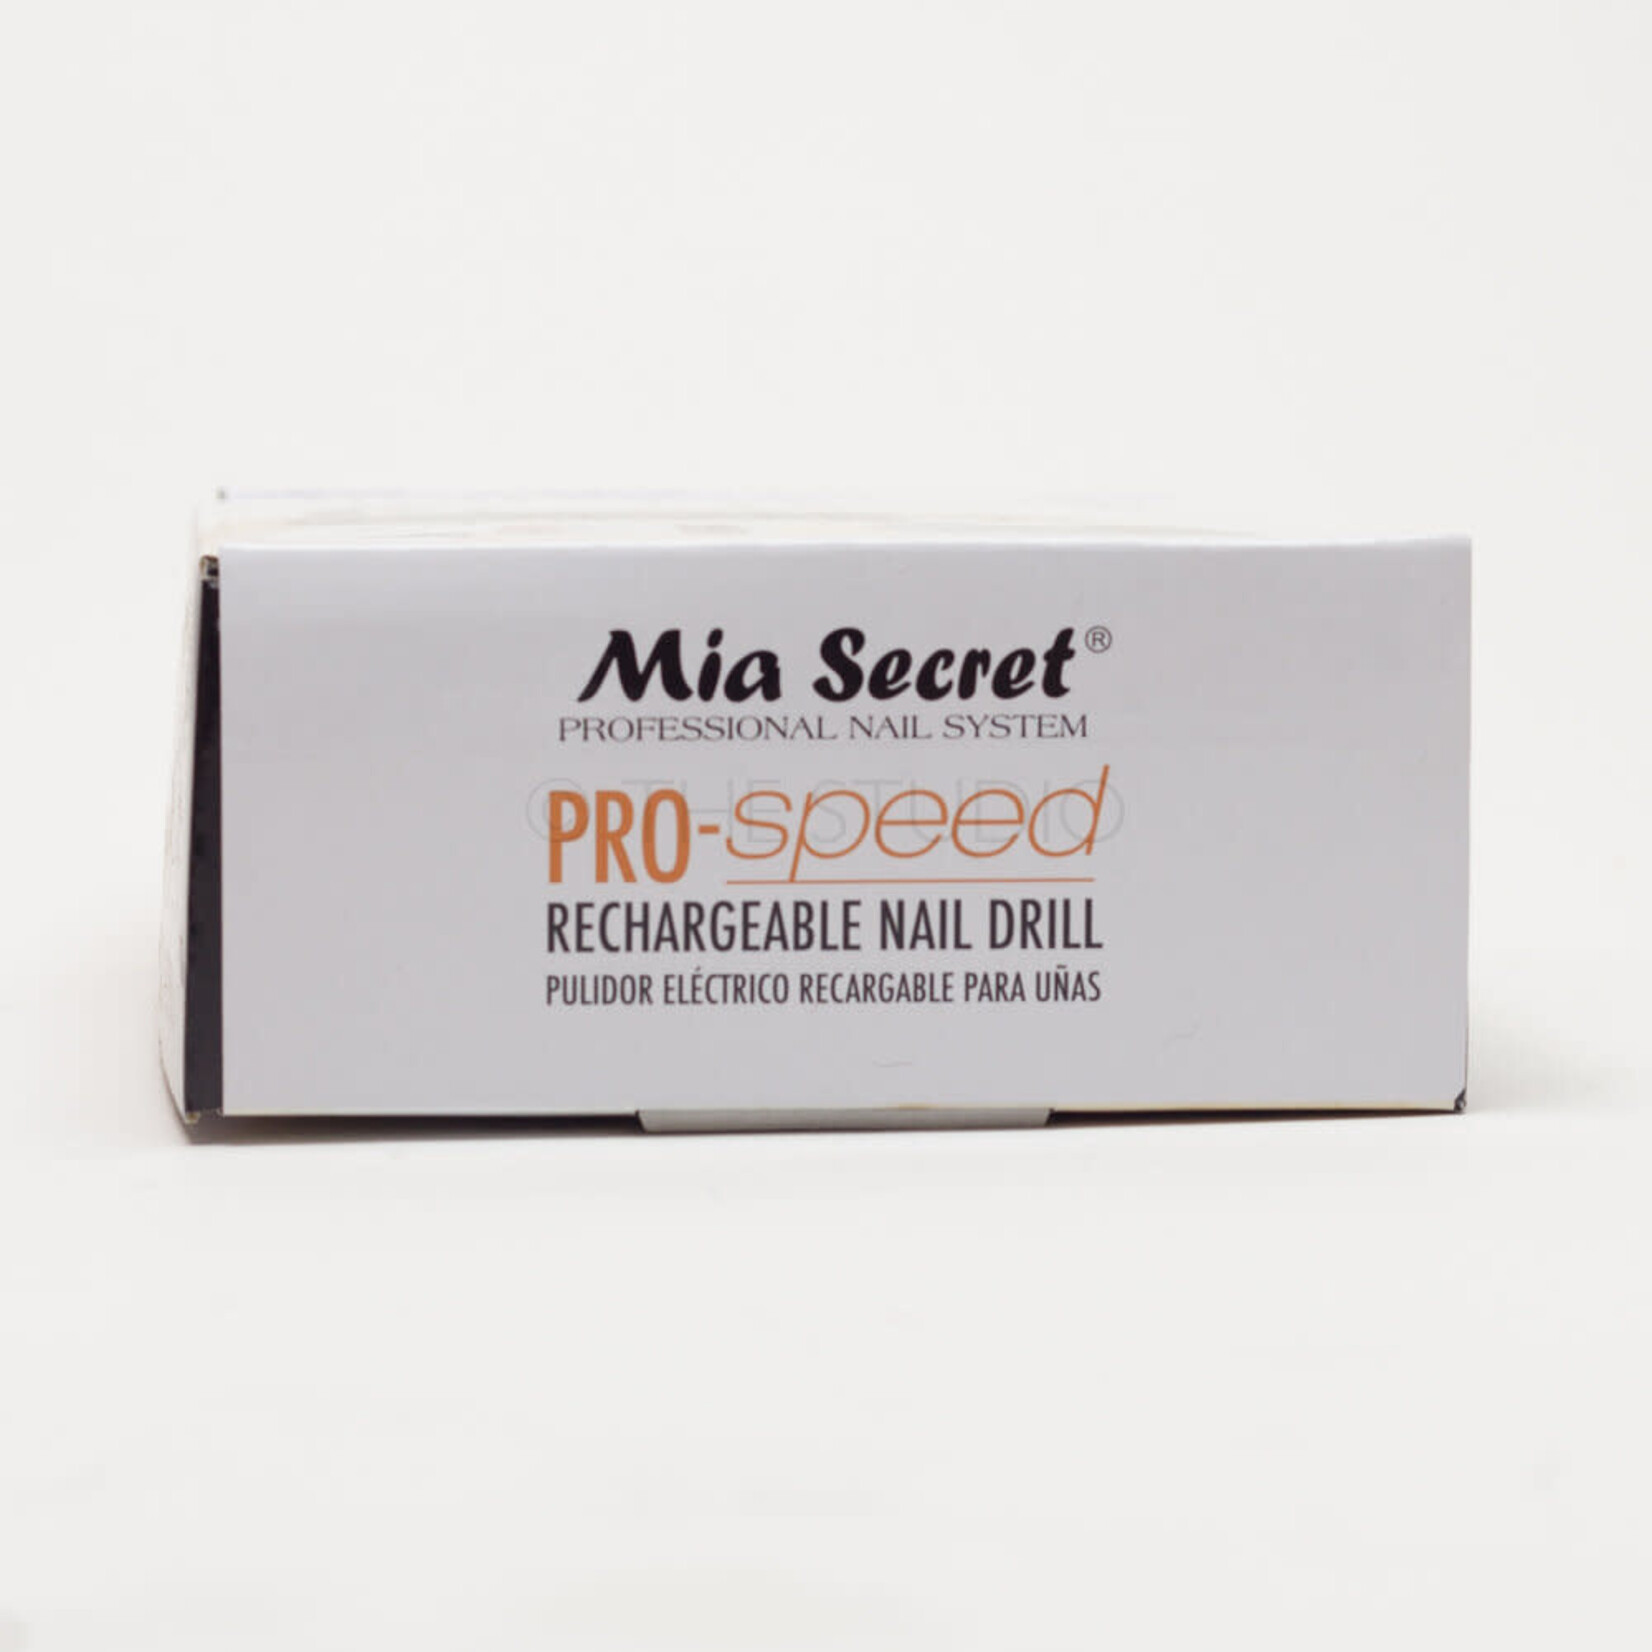 Mia Secret Mia Secret - Pro-Speed Rechargeable Nail E-File Drill with Metal Clip - Black